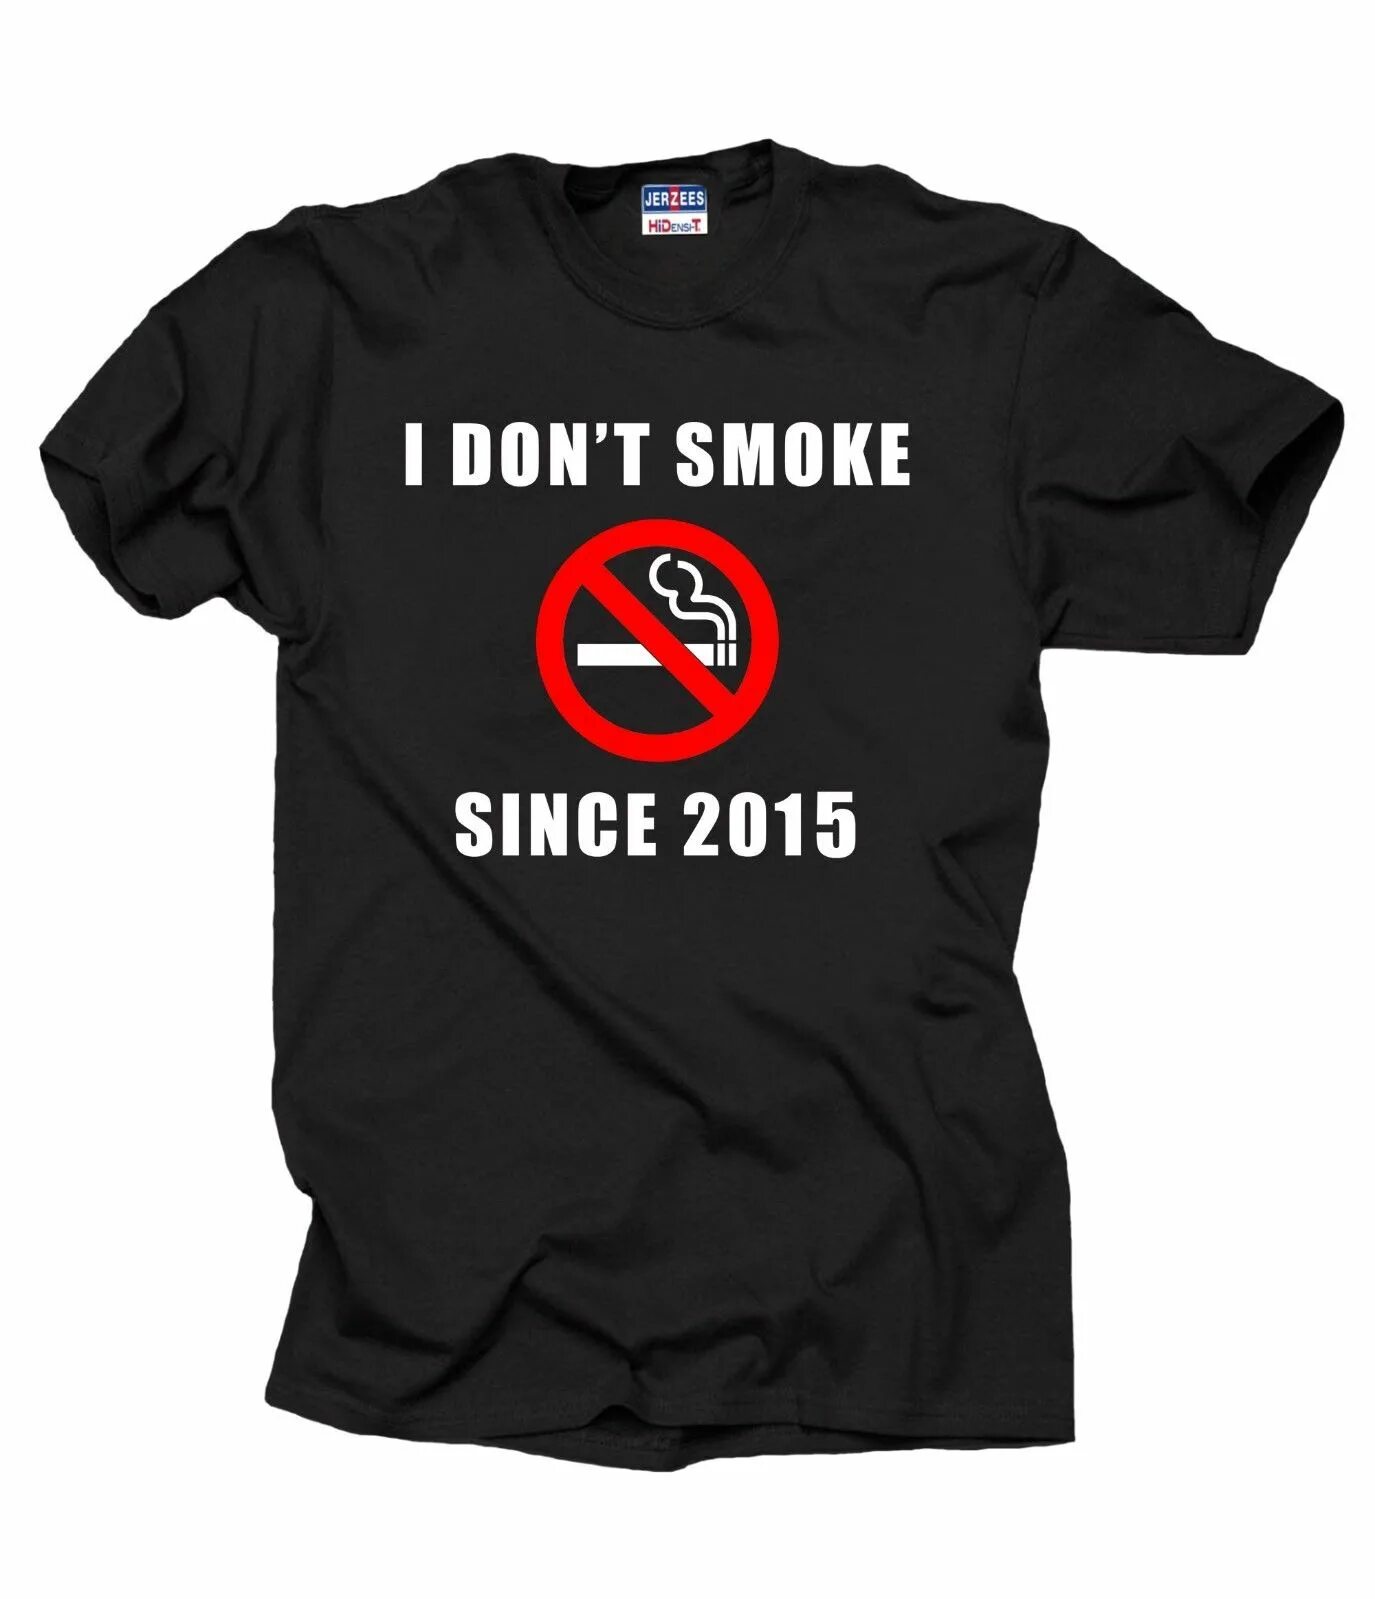 Since 2015. Футболка don't Smoke. Толстовка i dont Smoke. Майка i don't Smoke. Don't Smoke одежда футболка.